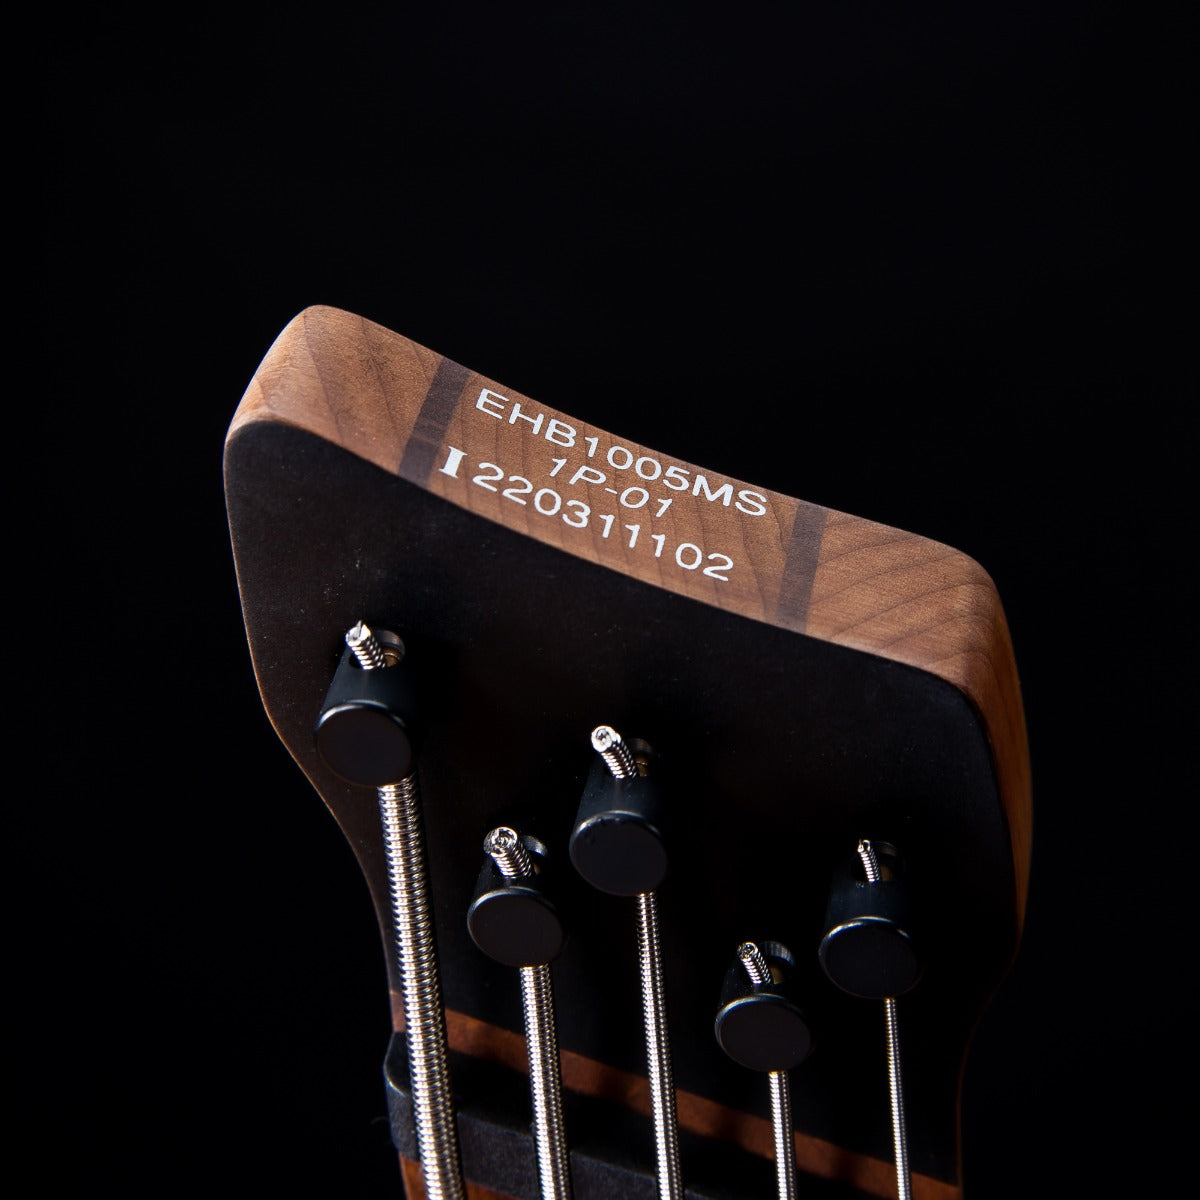 Ibanez EHB1005MS Ergonomic Headless 5-String Bass Guitar - Sea 